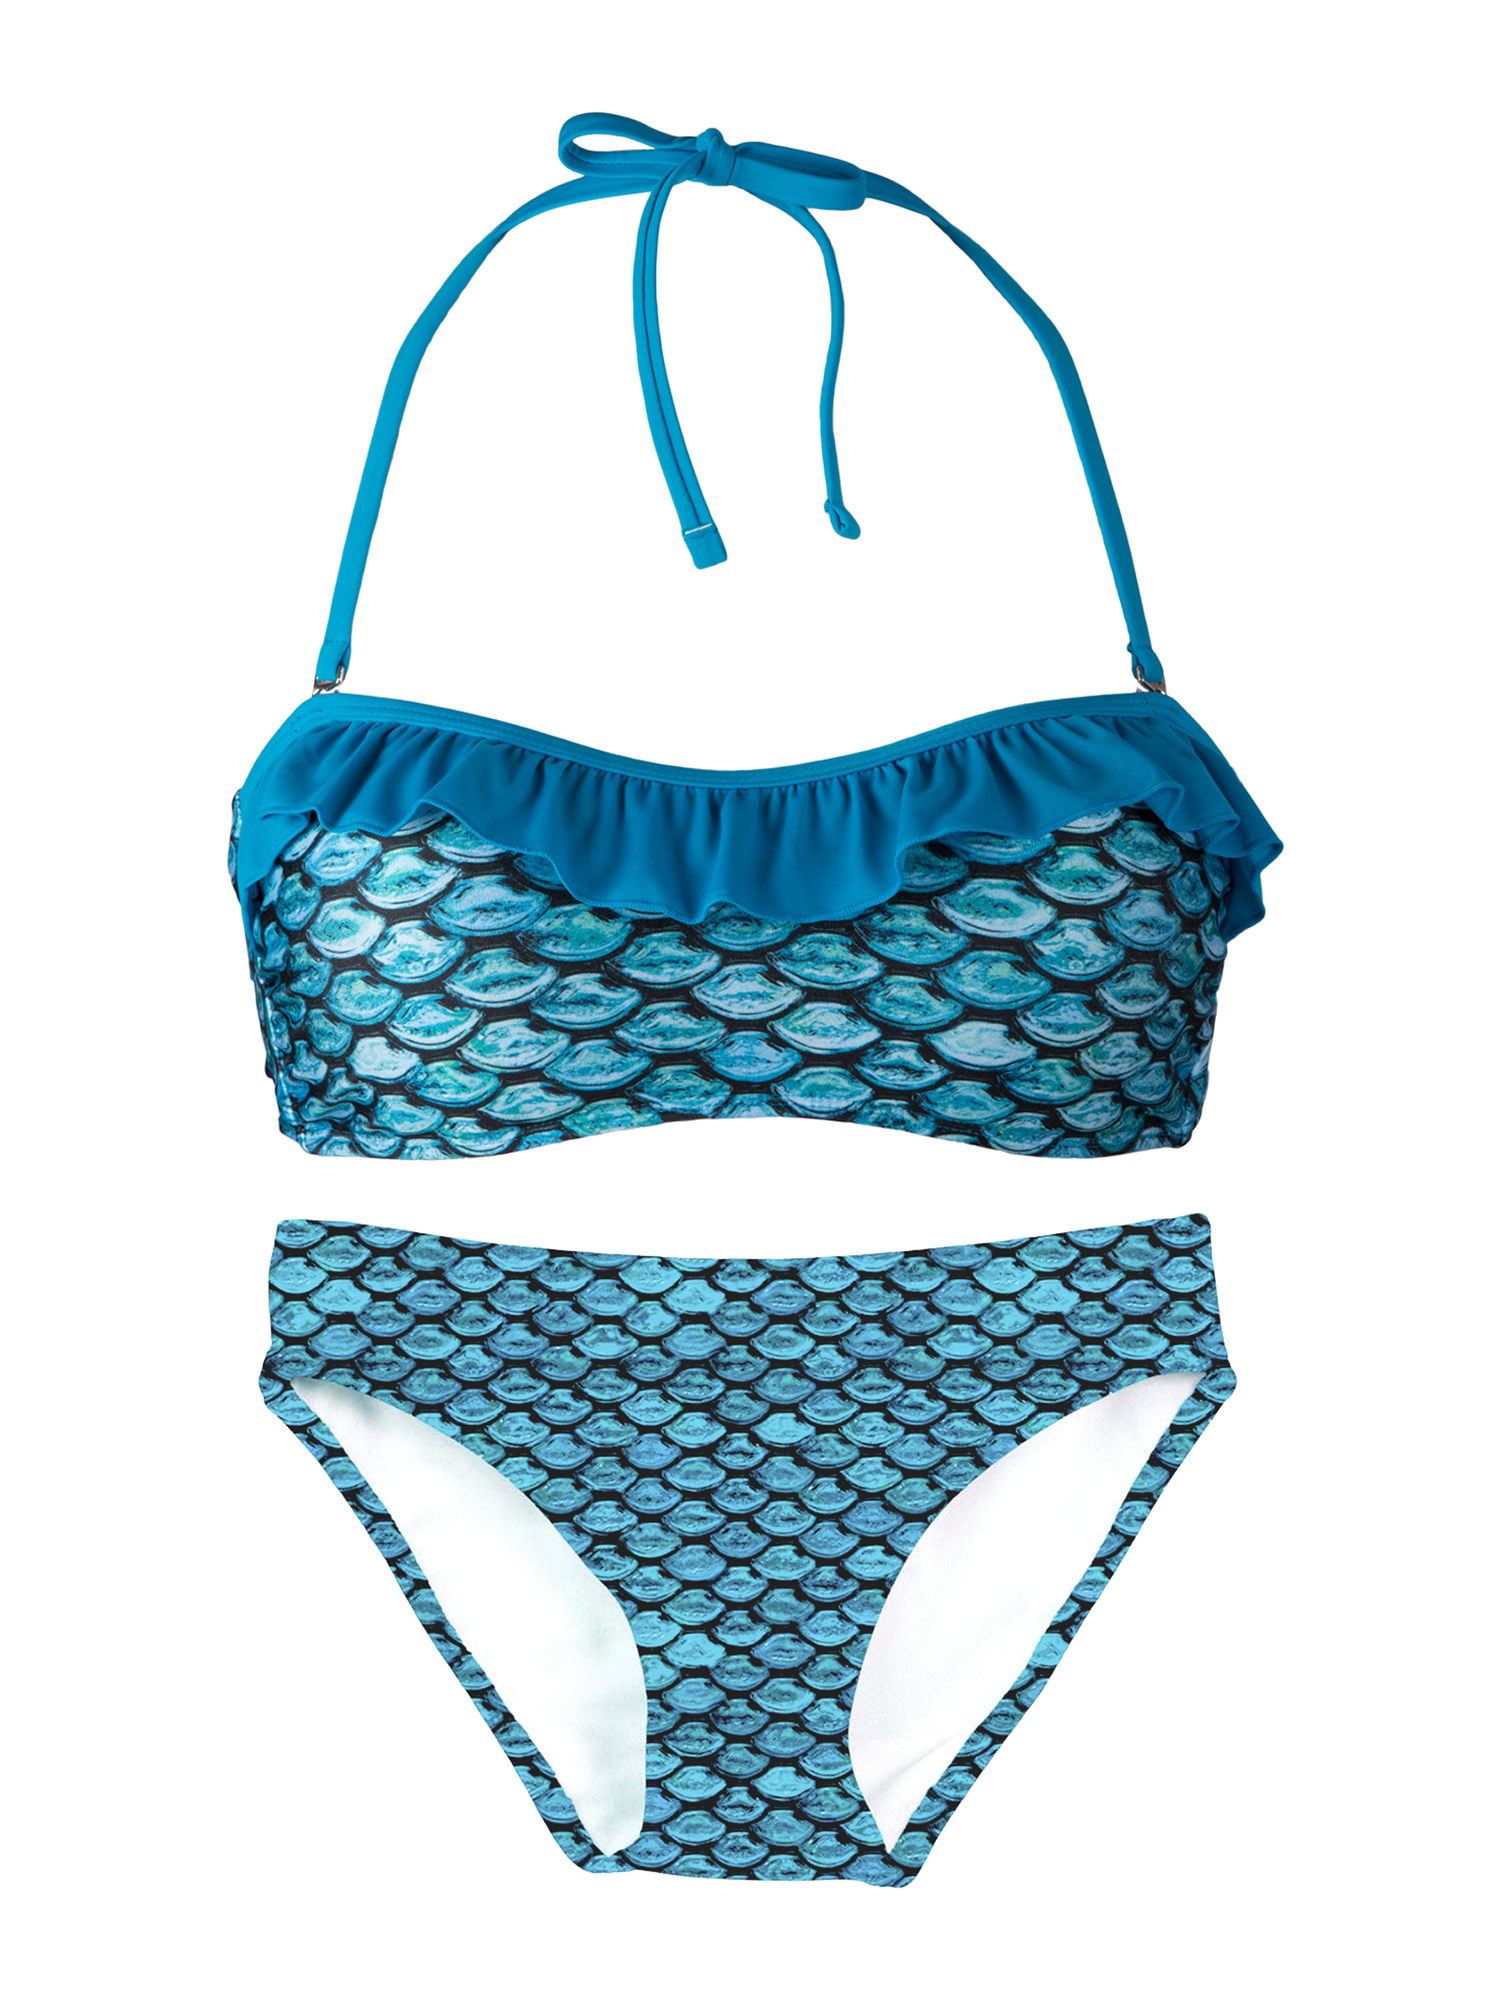 Womens Bandeau Bikini Set By Fin Fun Matches Fin Fun Mermaid Tails Ebay